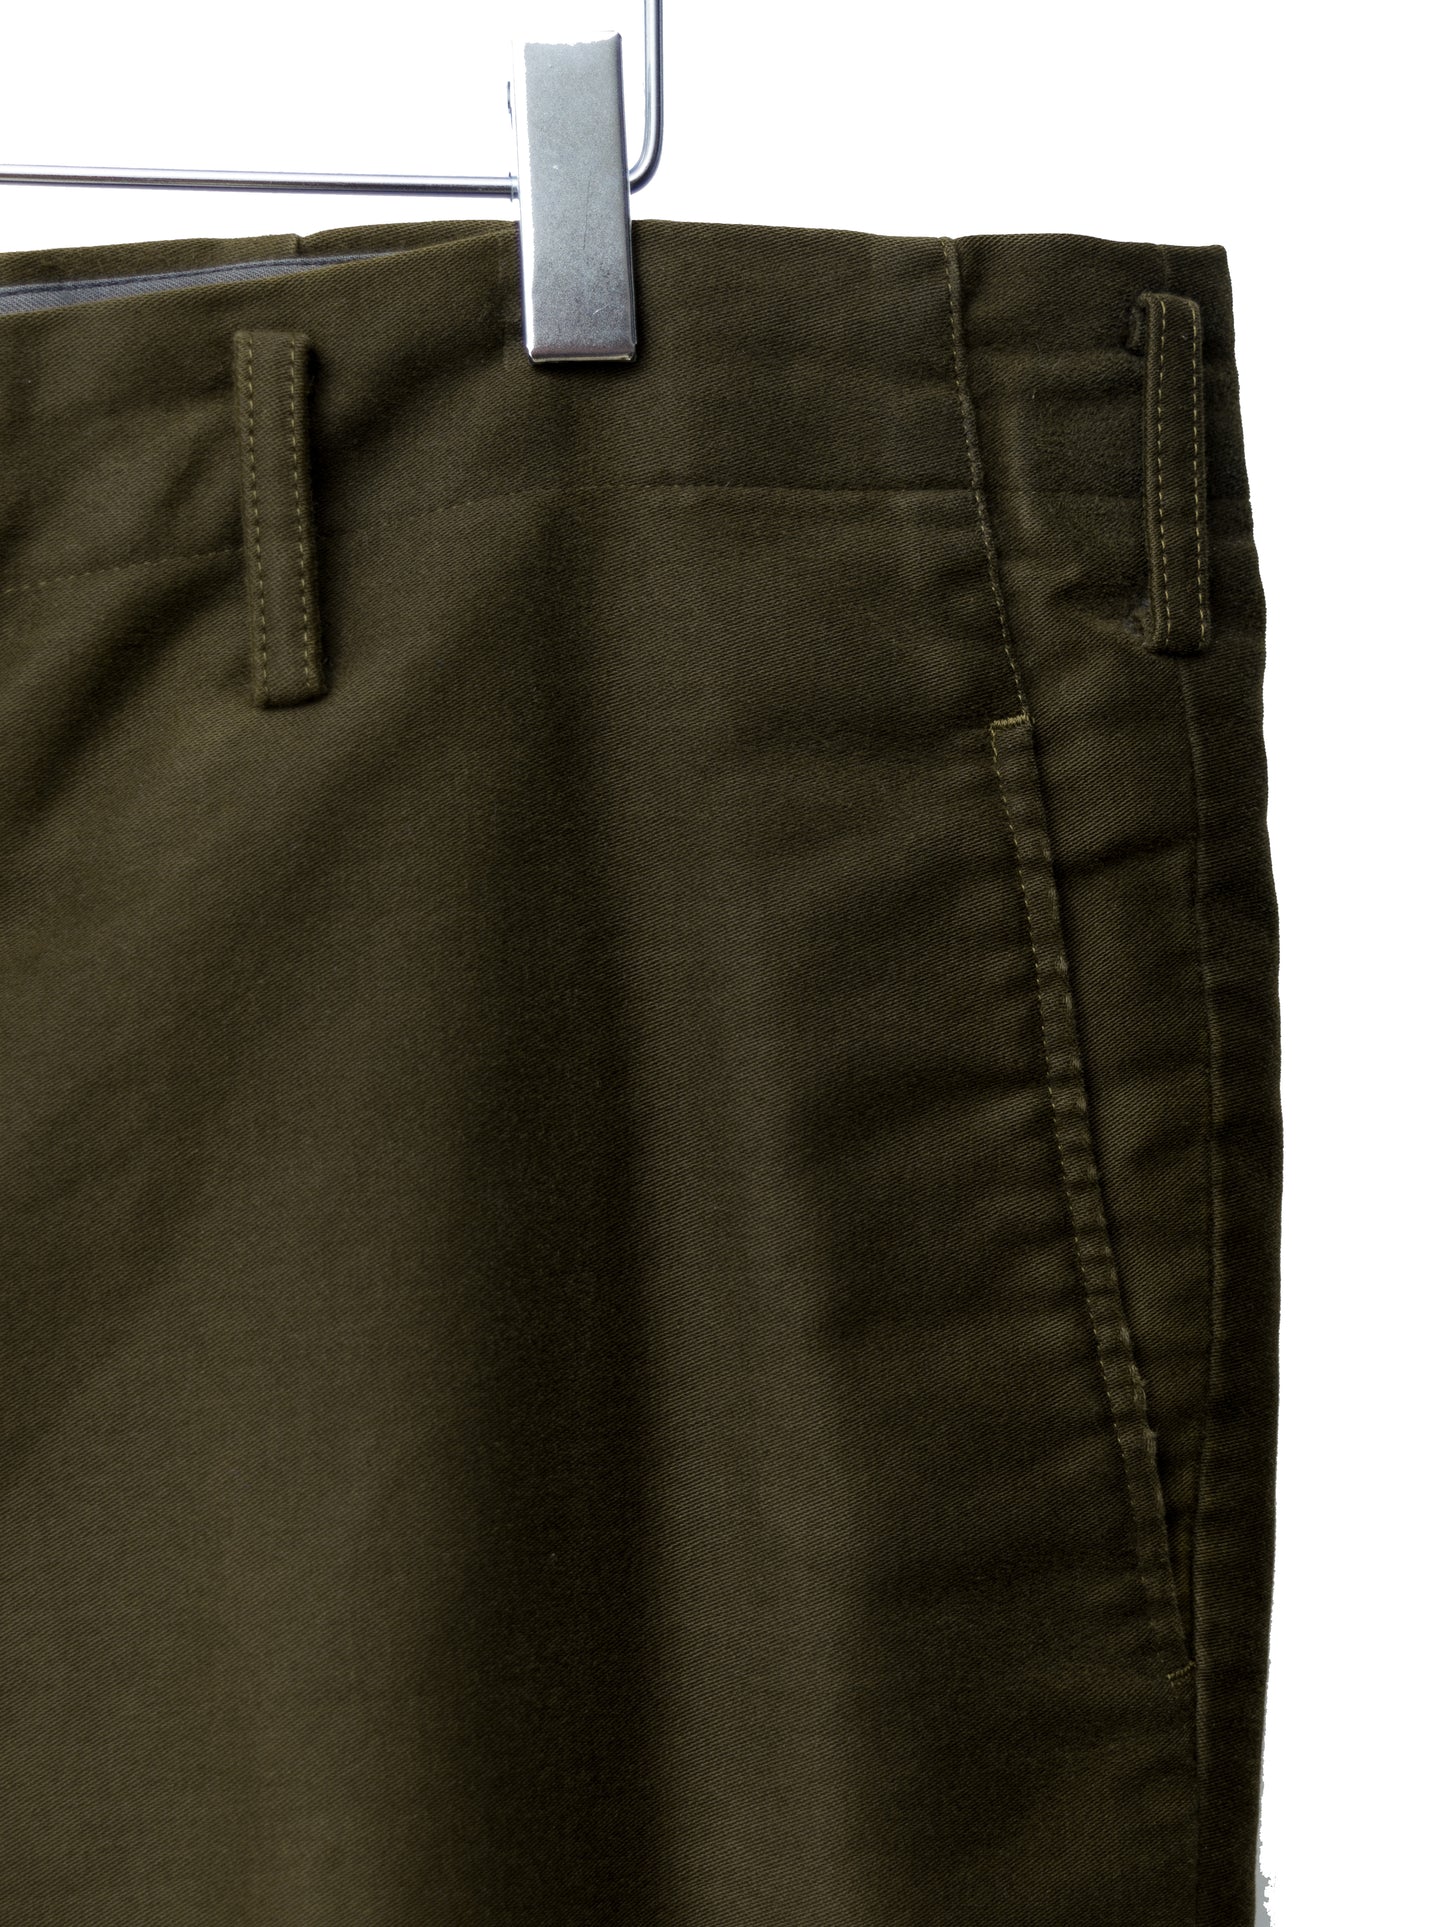 wide trousers olive brown ∙ cotton moleskin ∙ medium